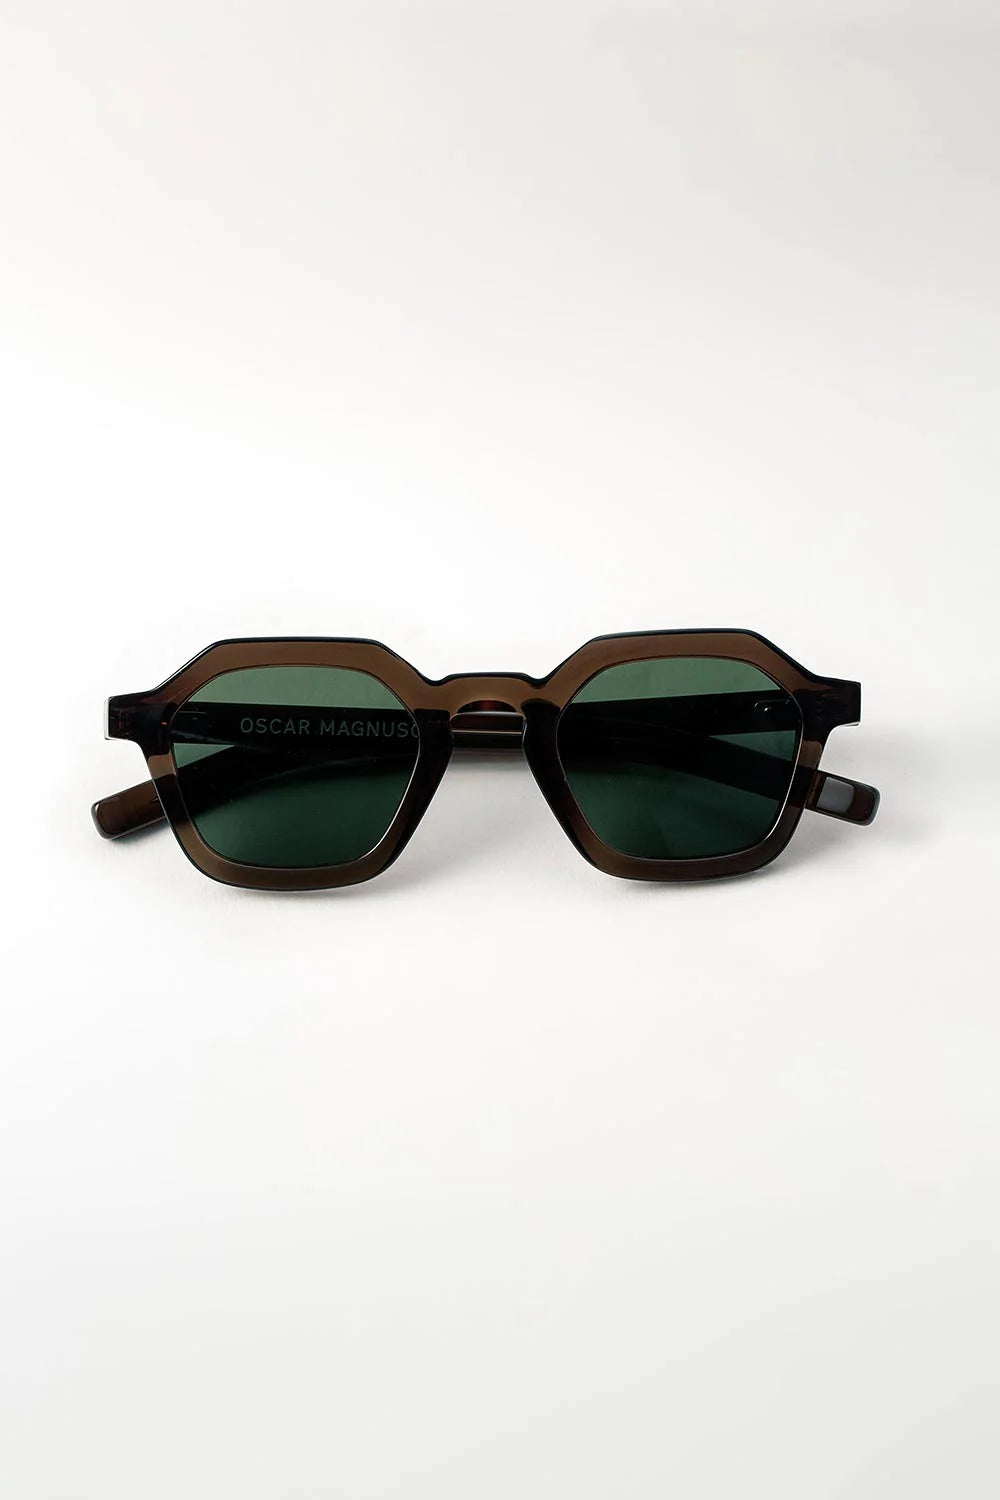 Oscar Magnuson - Sunglasses Batty Urban Green